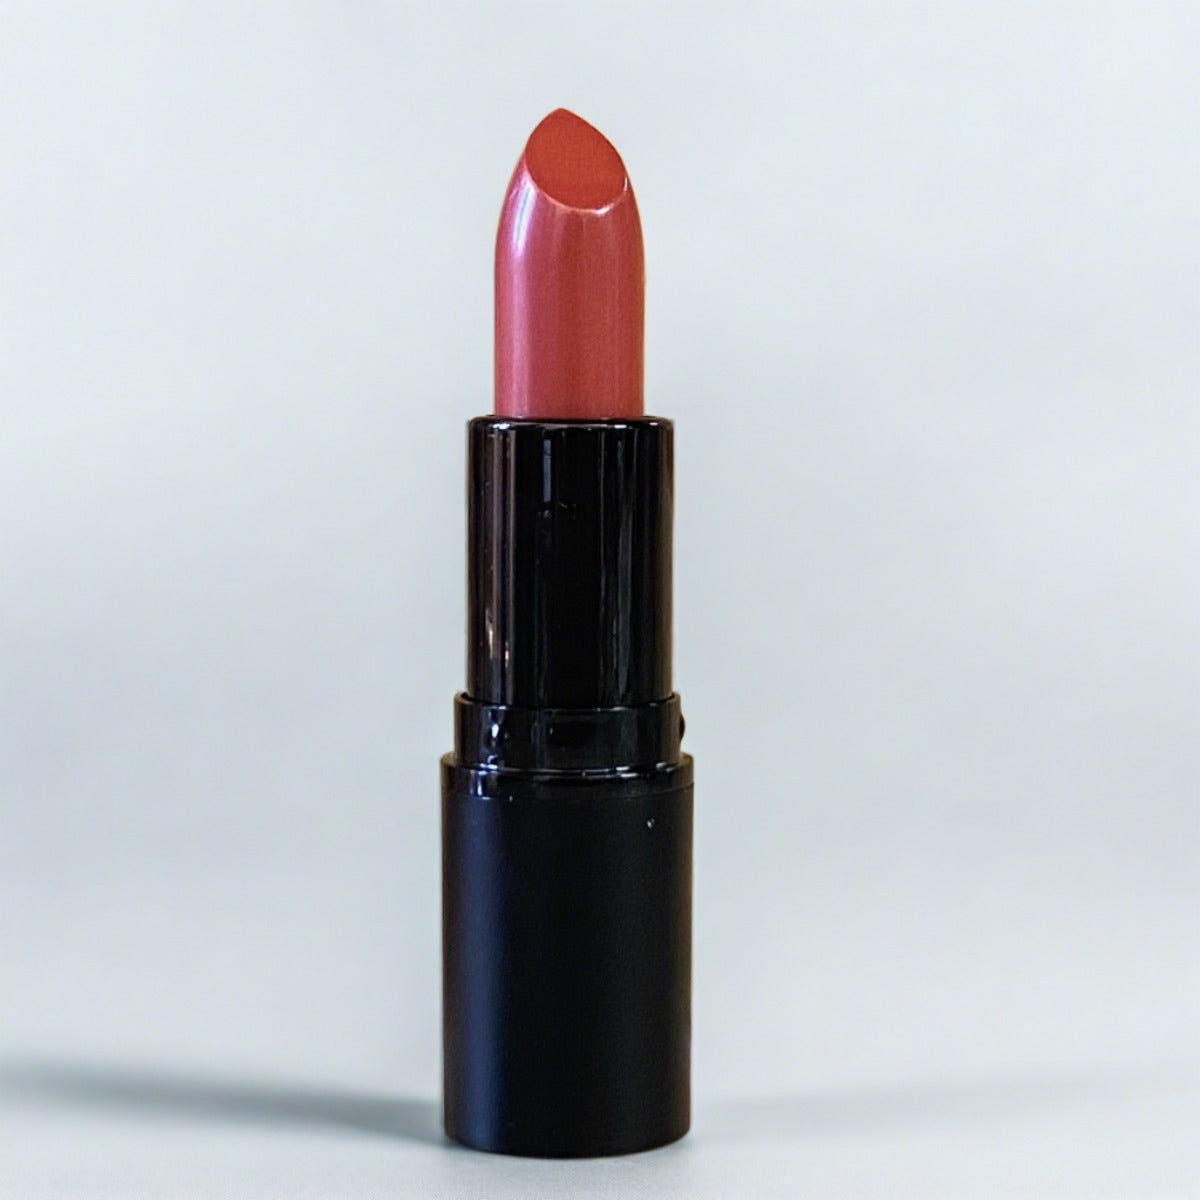 Natural and organic spice Metro Lipstick